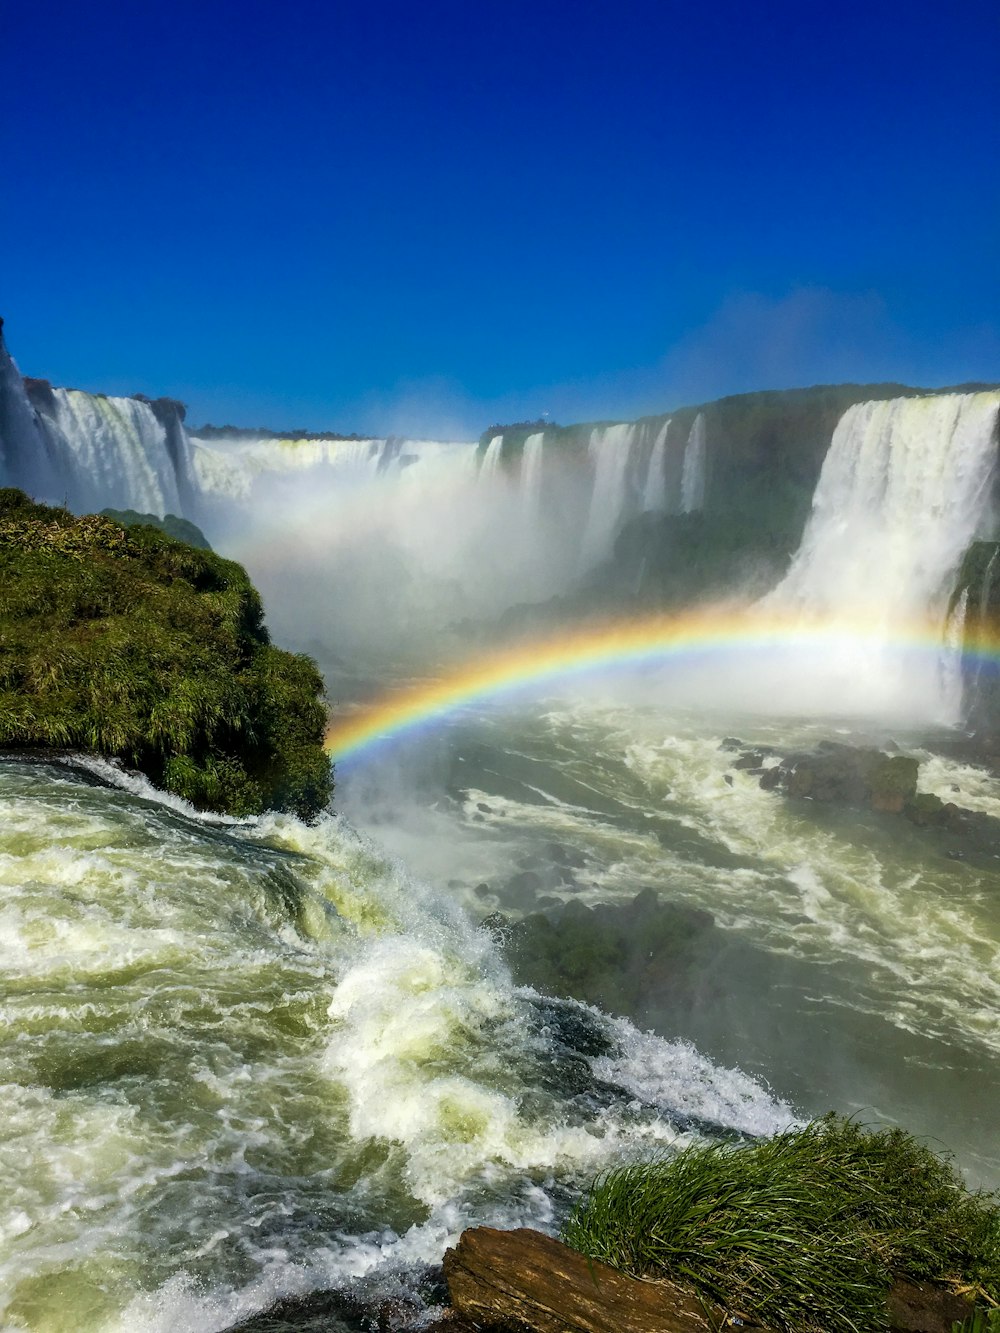 Niagara falls showing rainbow